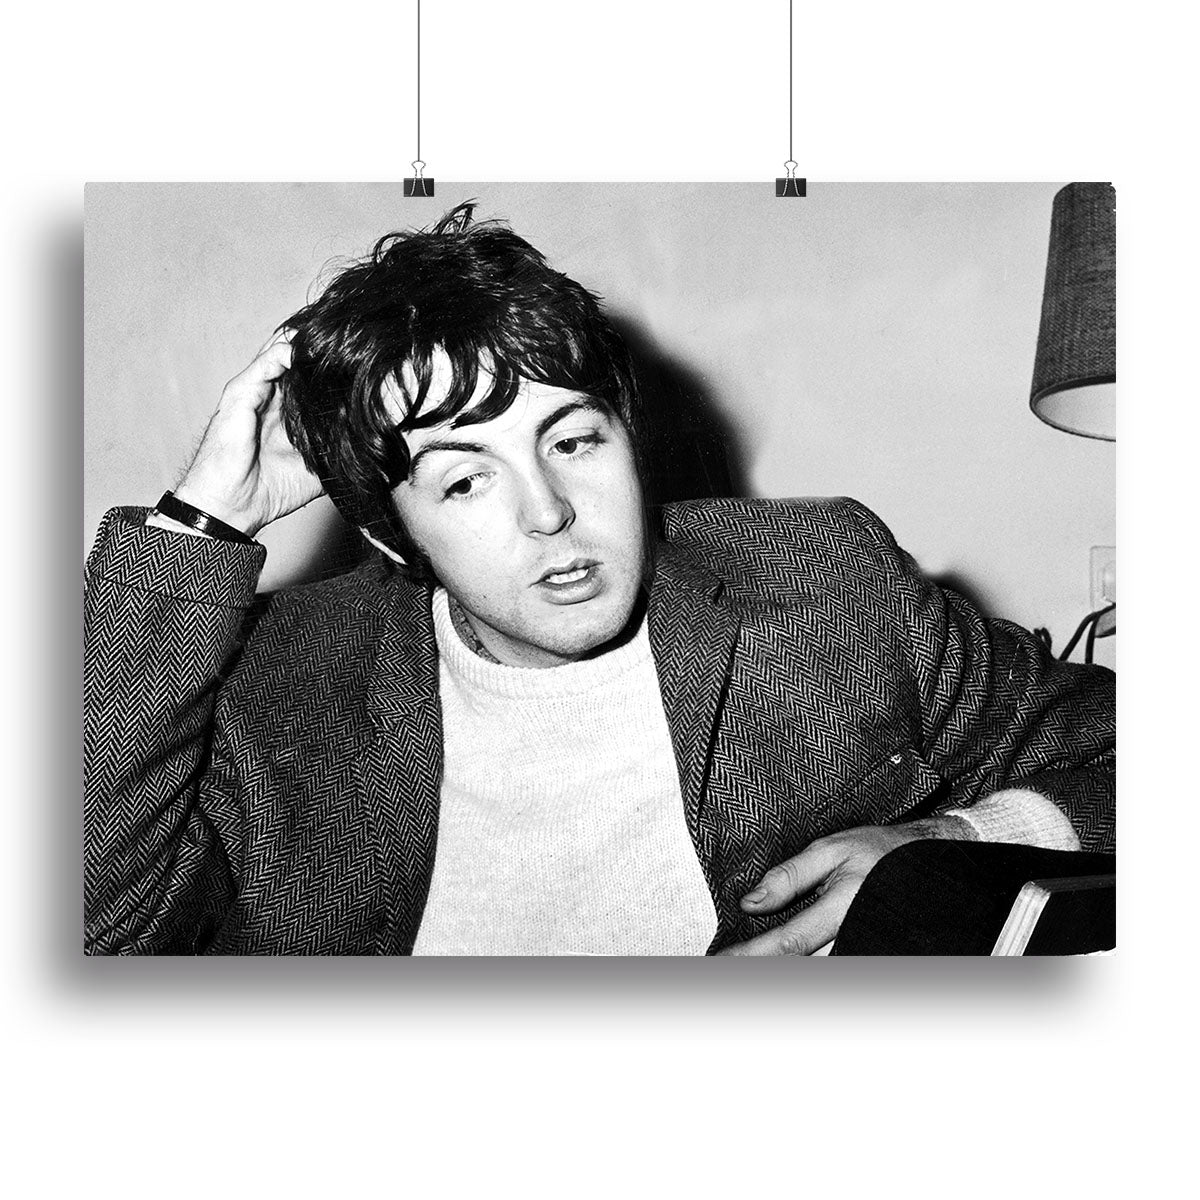 Paul McCartney being interviewed Canvas Print or Poster - Canvas Art Rocks - 2